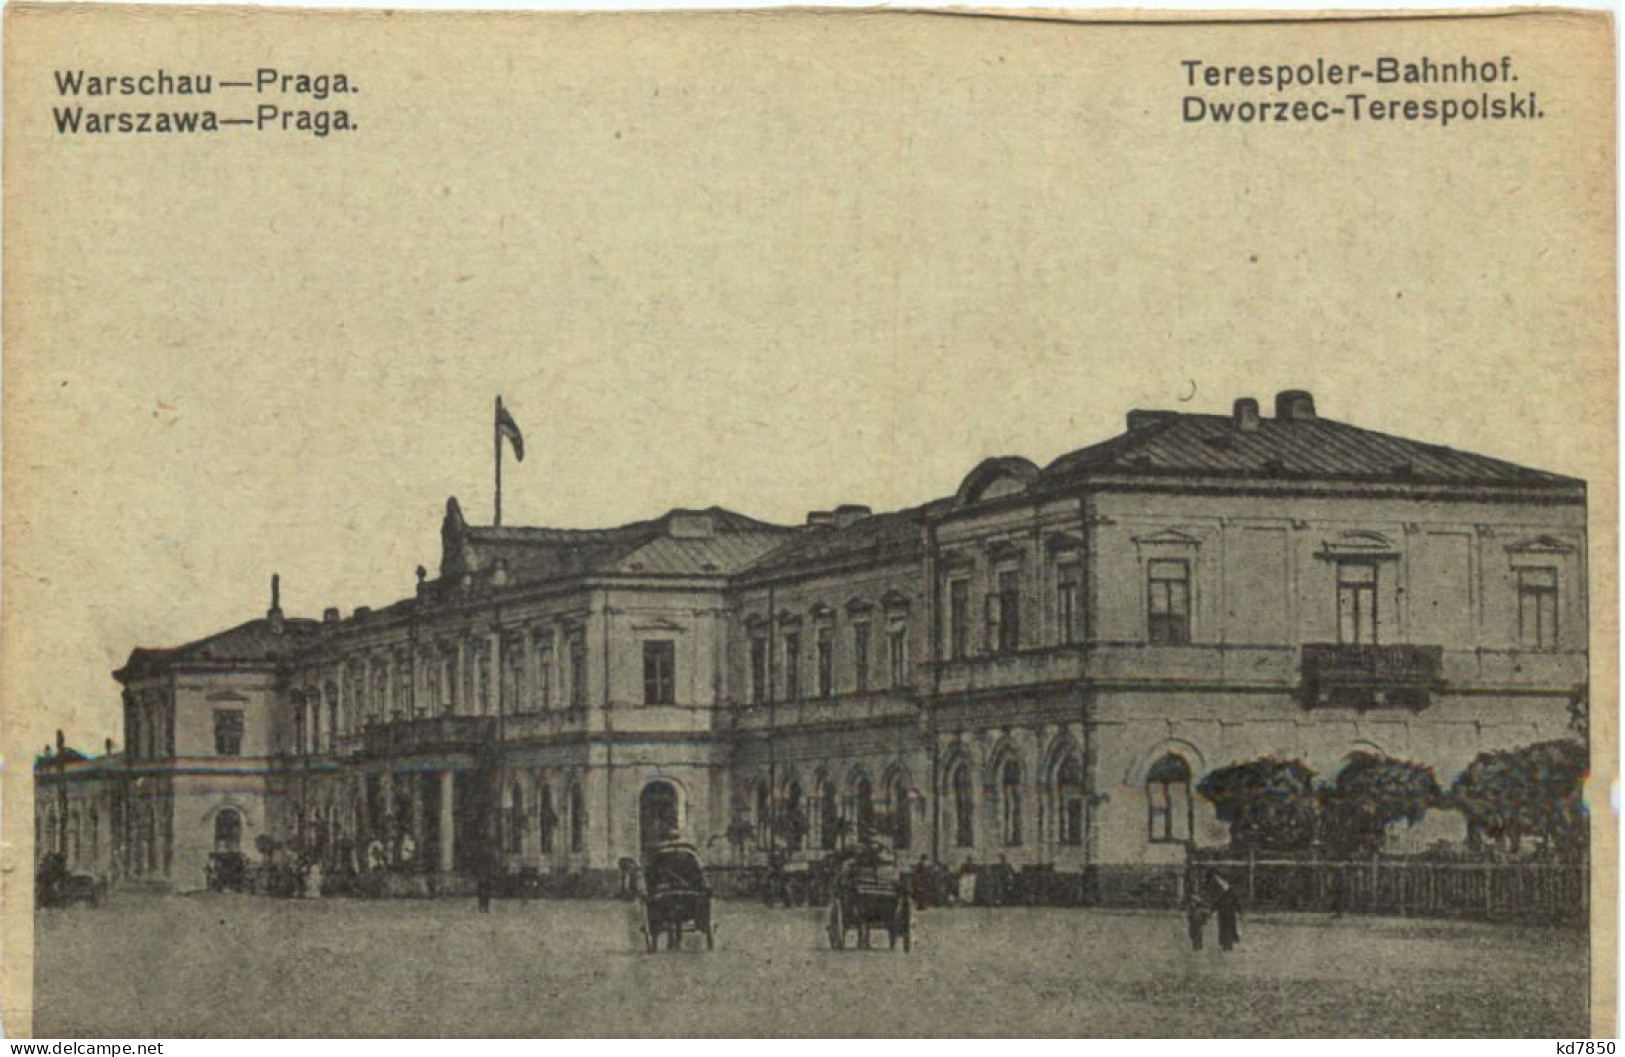 Warschau - Warszawa - Terespoler Bahnhof - Poland